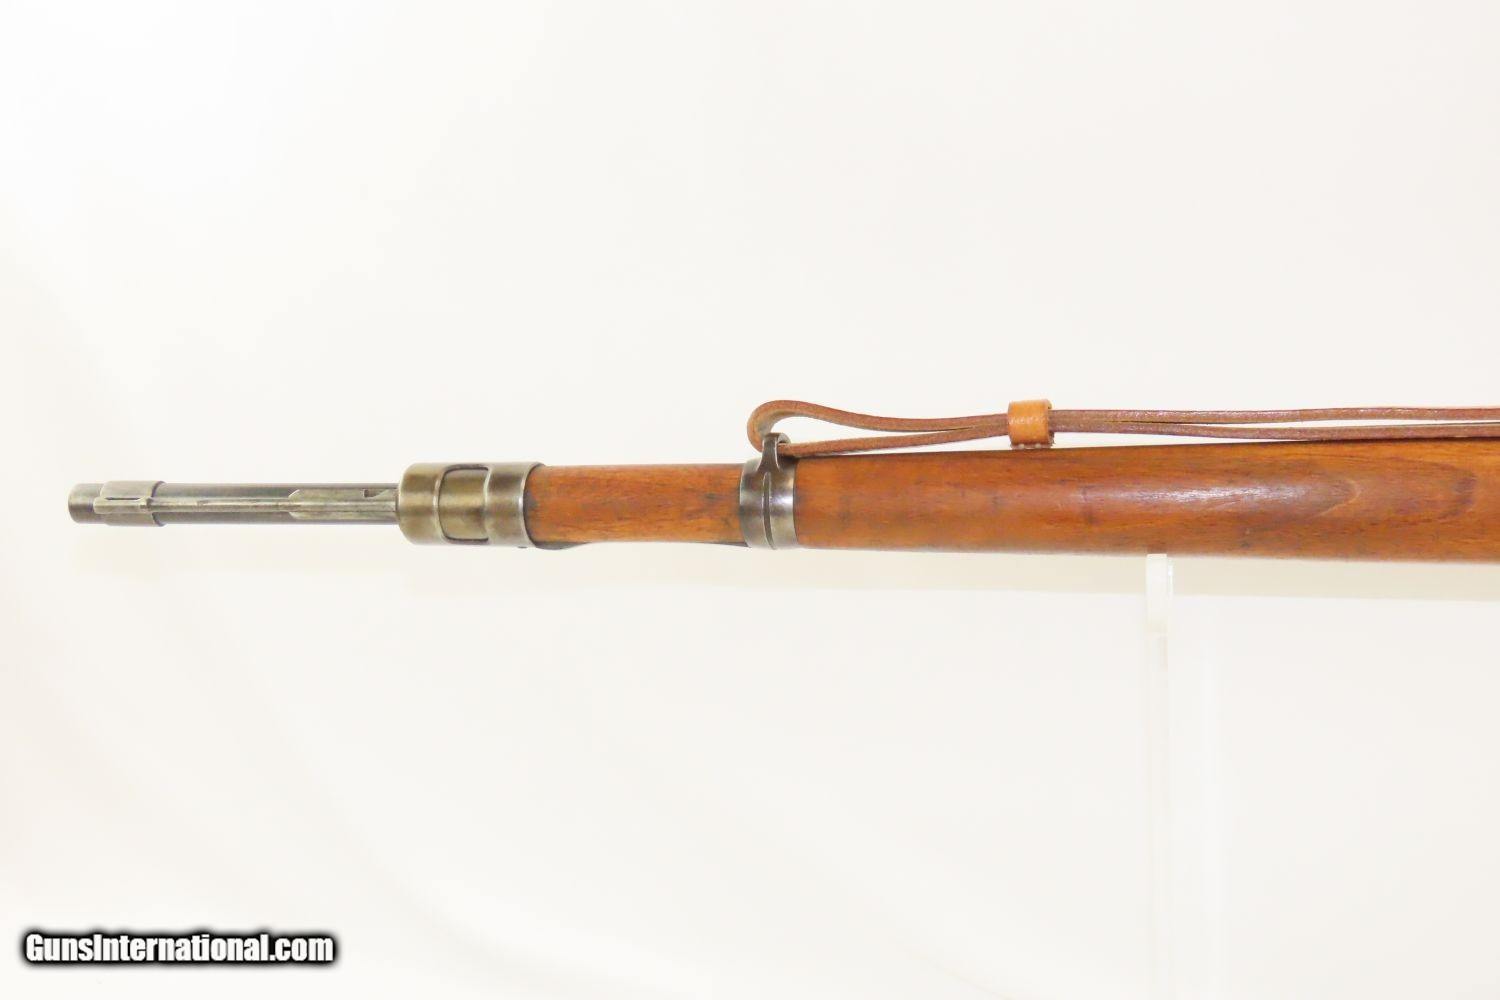 Pre-World War II NAZI German Mauser “s/42” Code 1936 Dated Model 98 Rifle  Nazi Germany Third Reich Infantry Rifle!